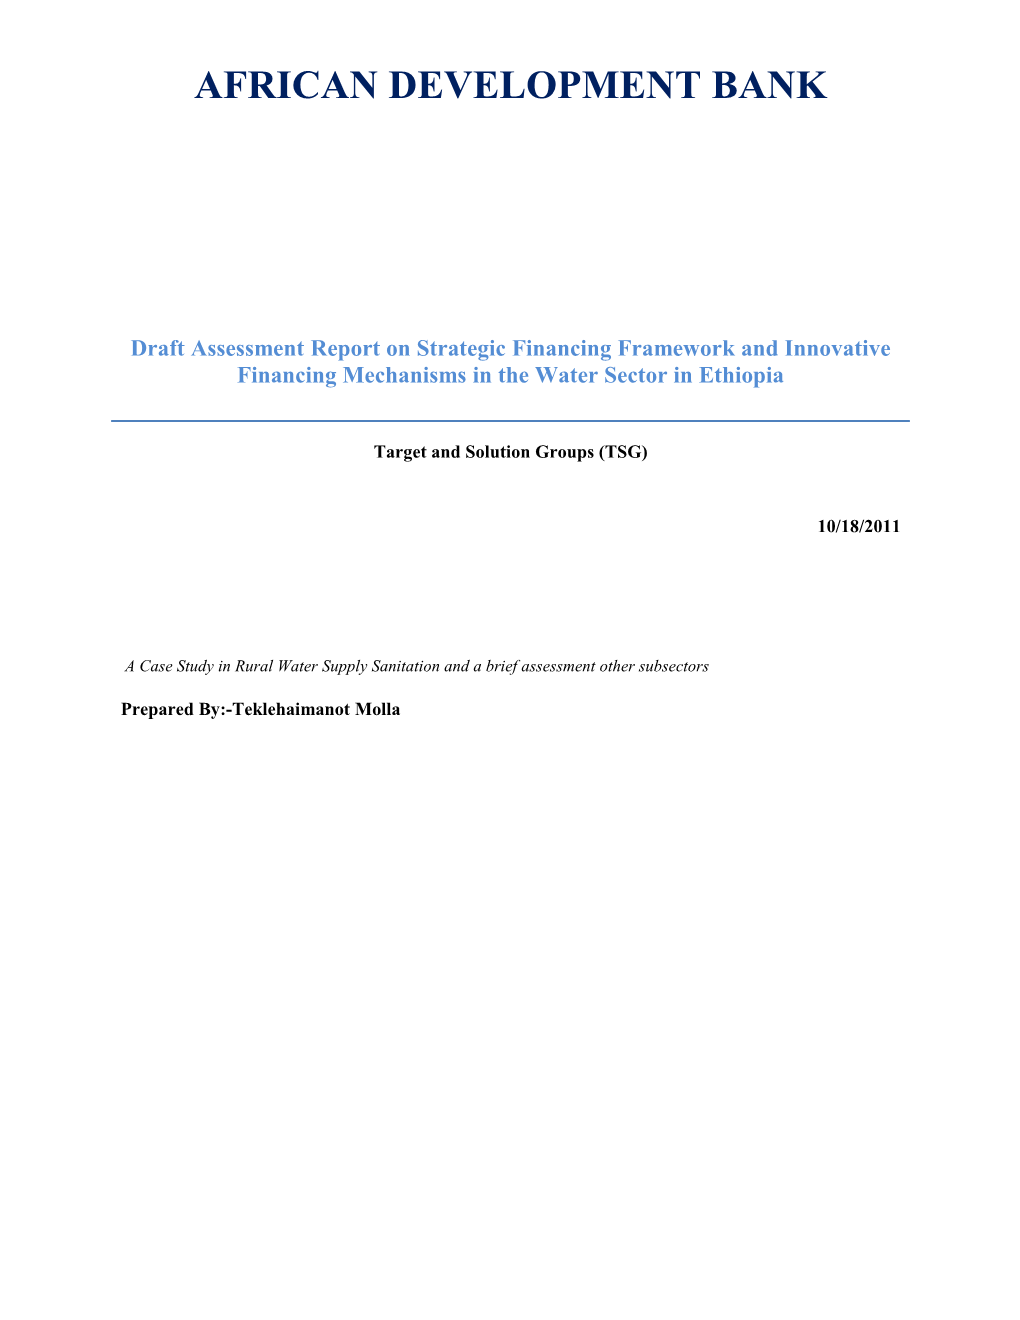 Draft Assessment Report on Strategic Financing Framework and Innovative Financing Mechanisms